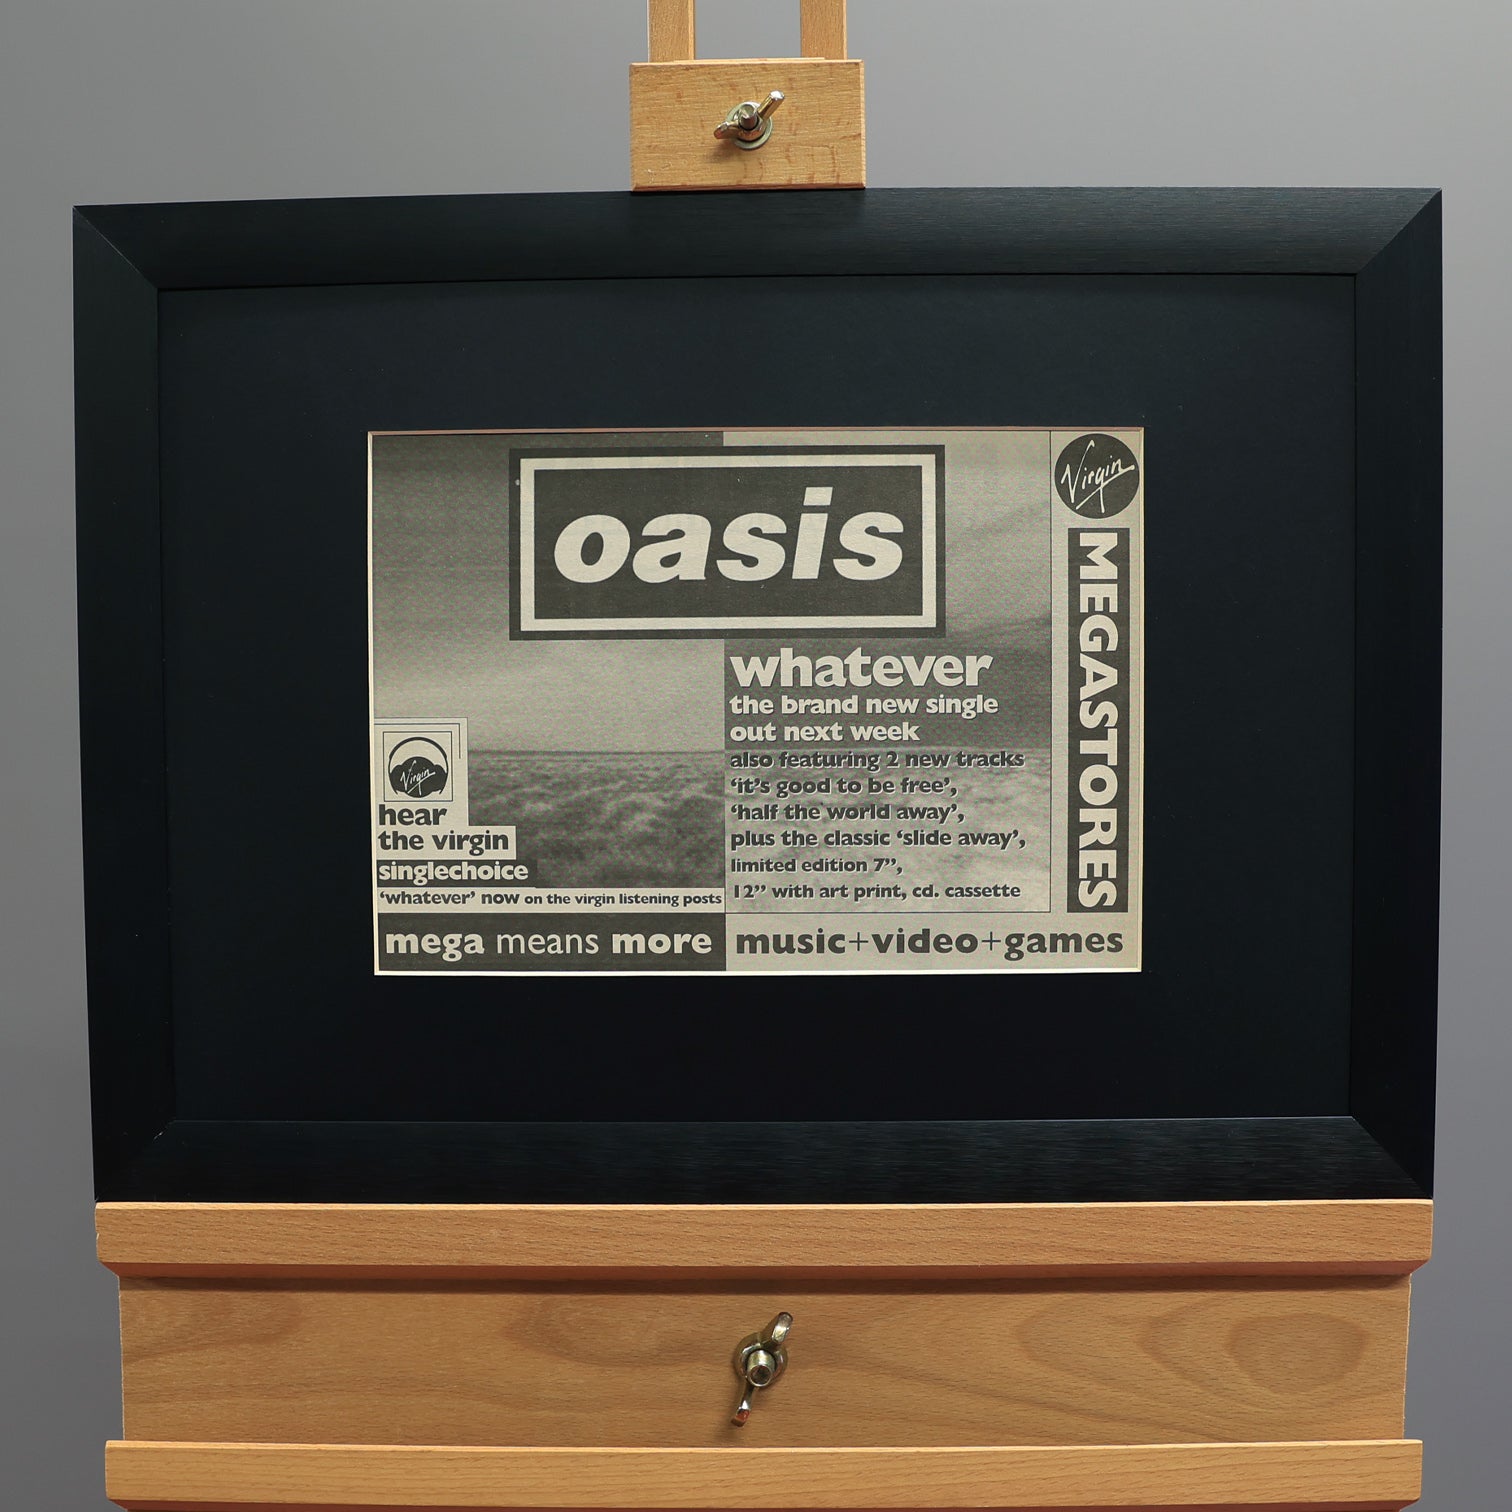 Oasis - Whatever - Virgin Megastore 1994 Press Ad - New Item